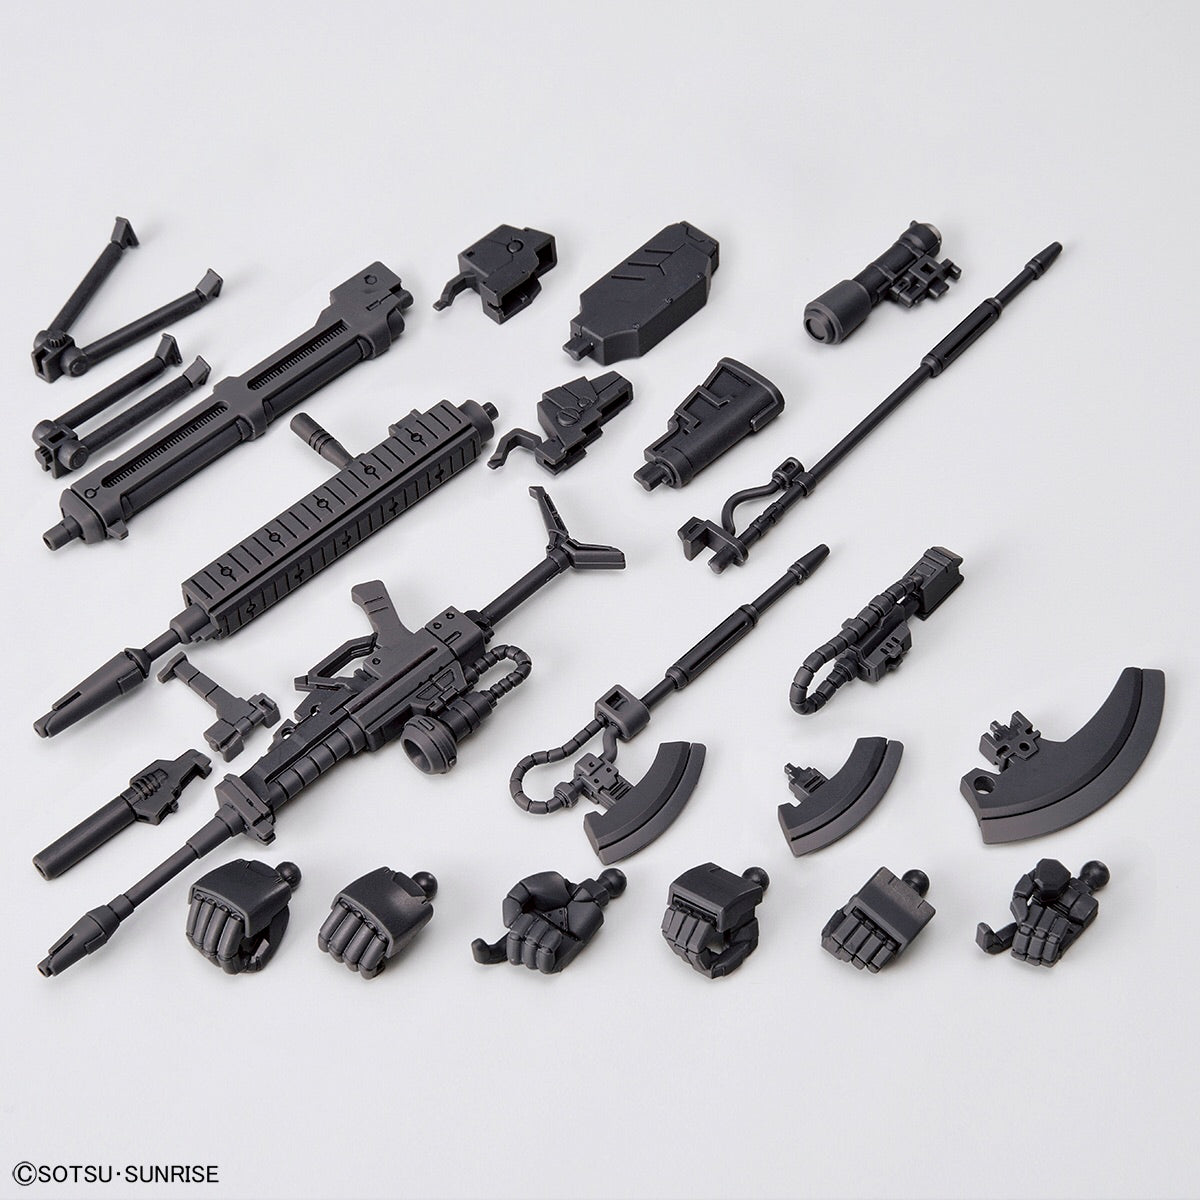 Gundam Base Limited 1/144 System Weapon Kit 002